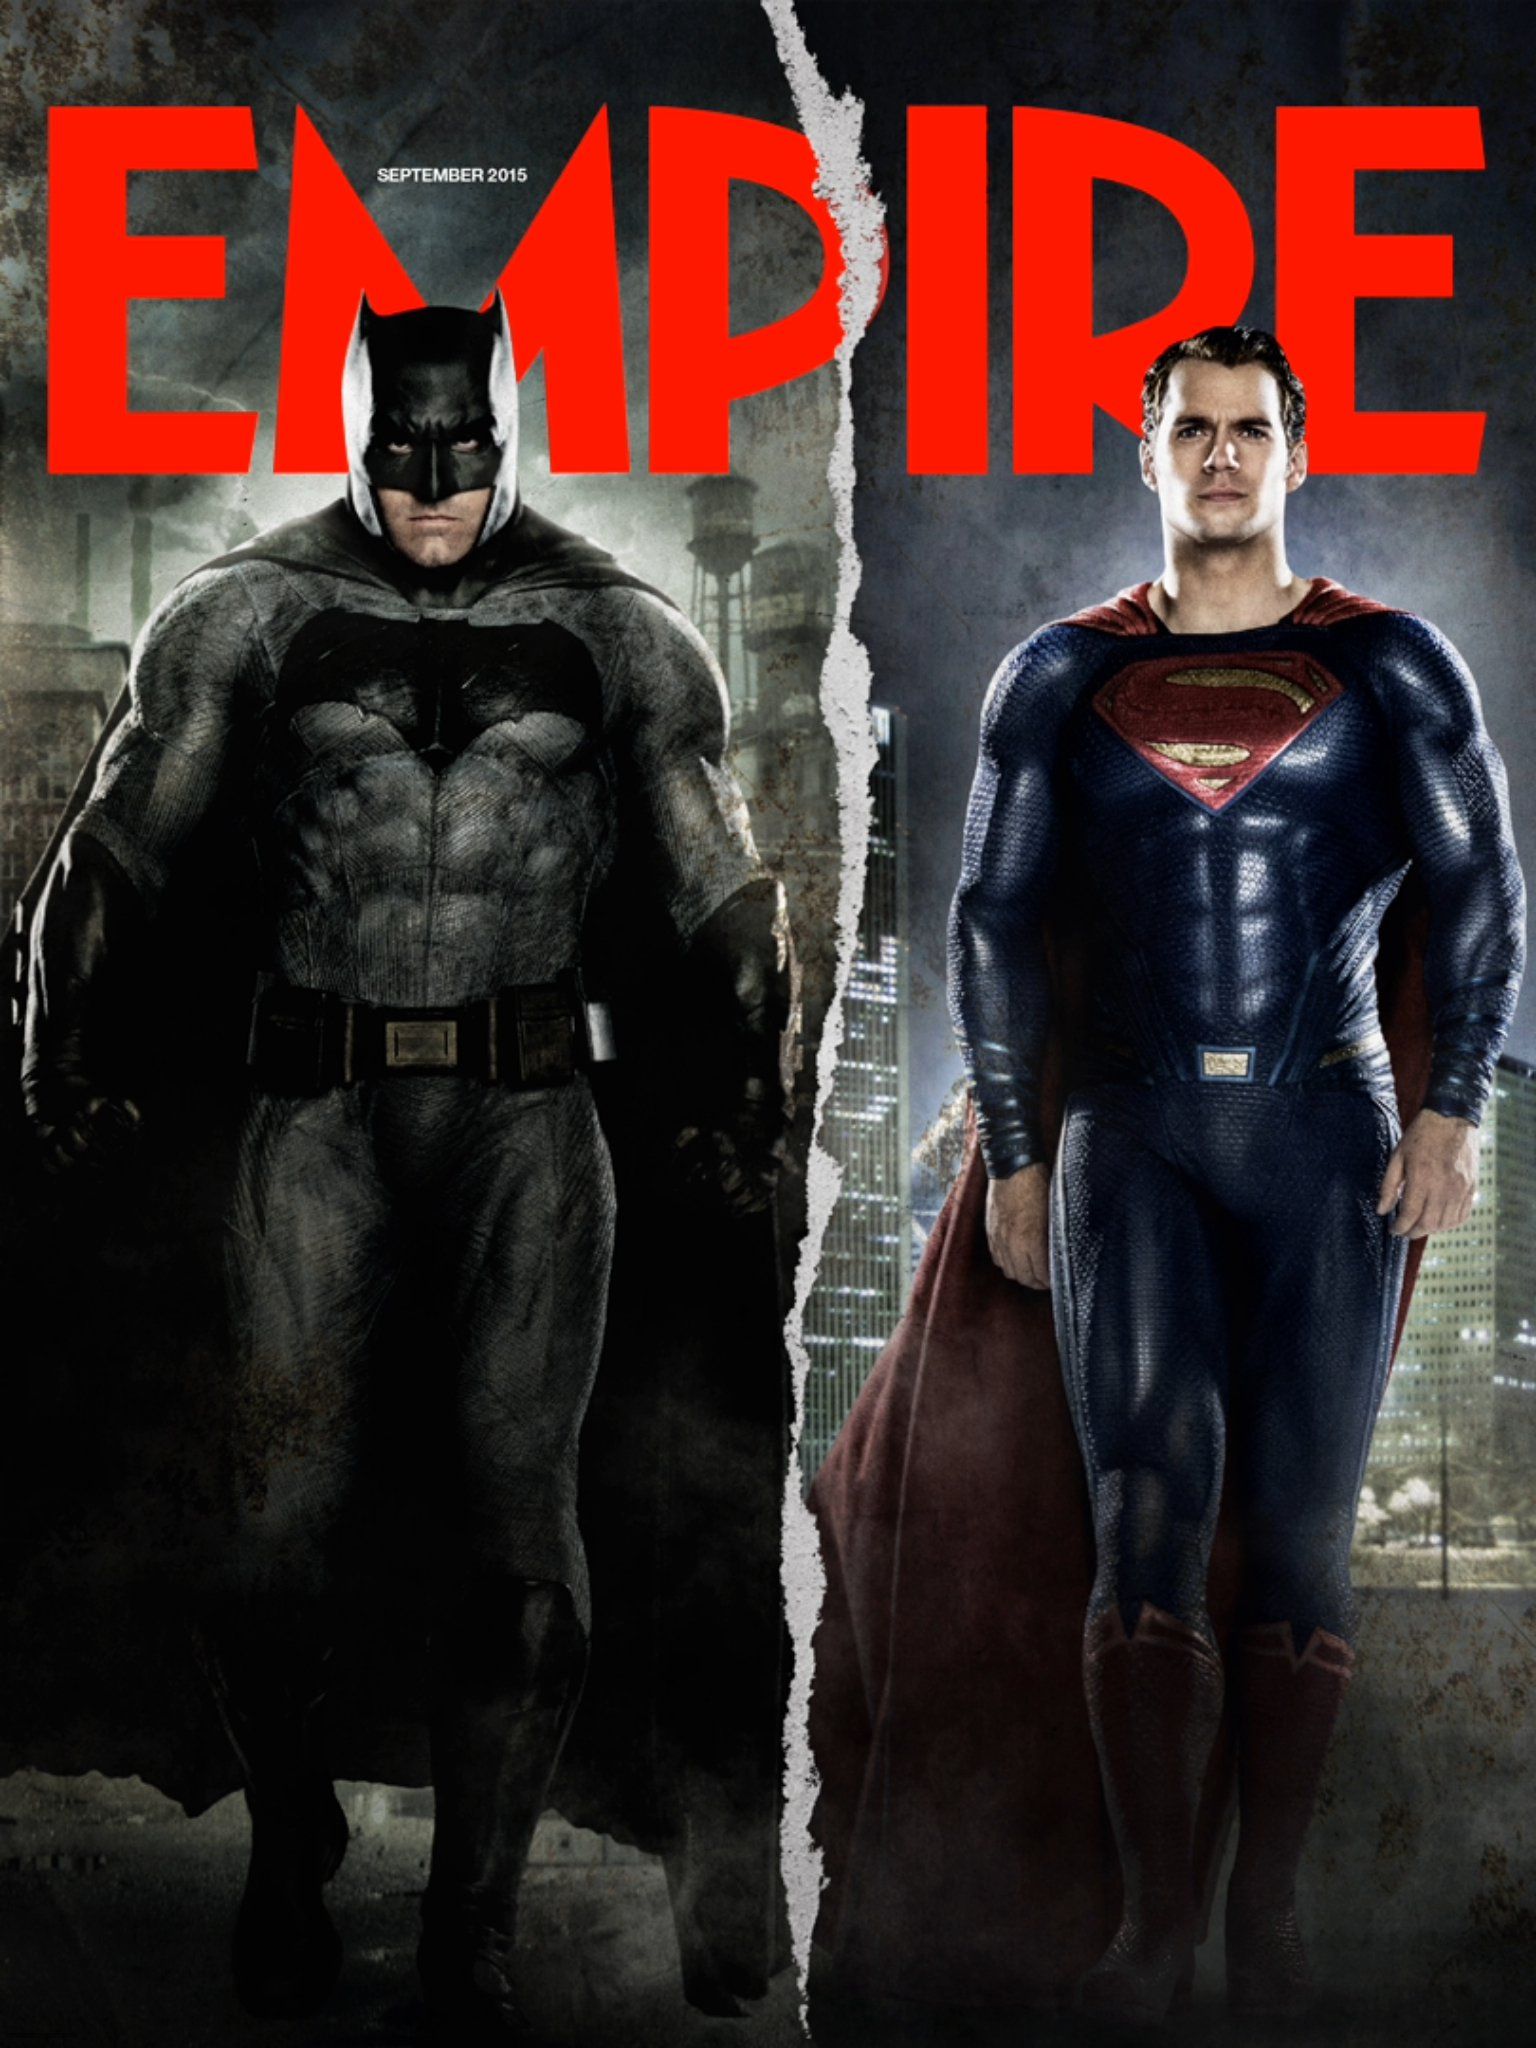 Batman vs Superman Images Feature Bruce Wayne and Clark ...
